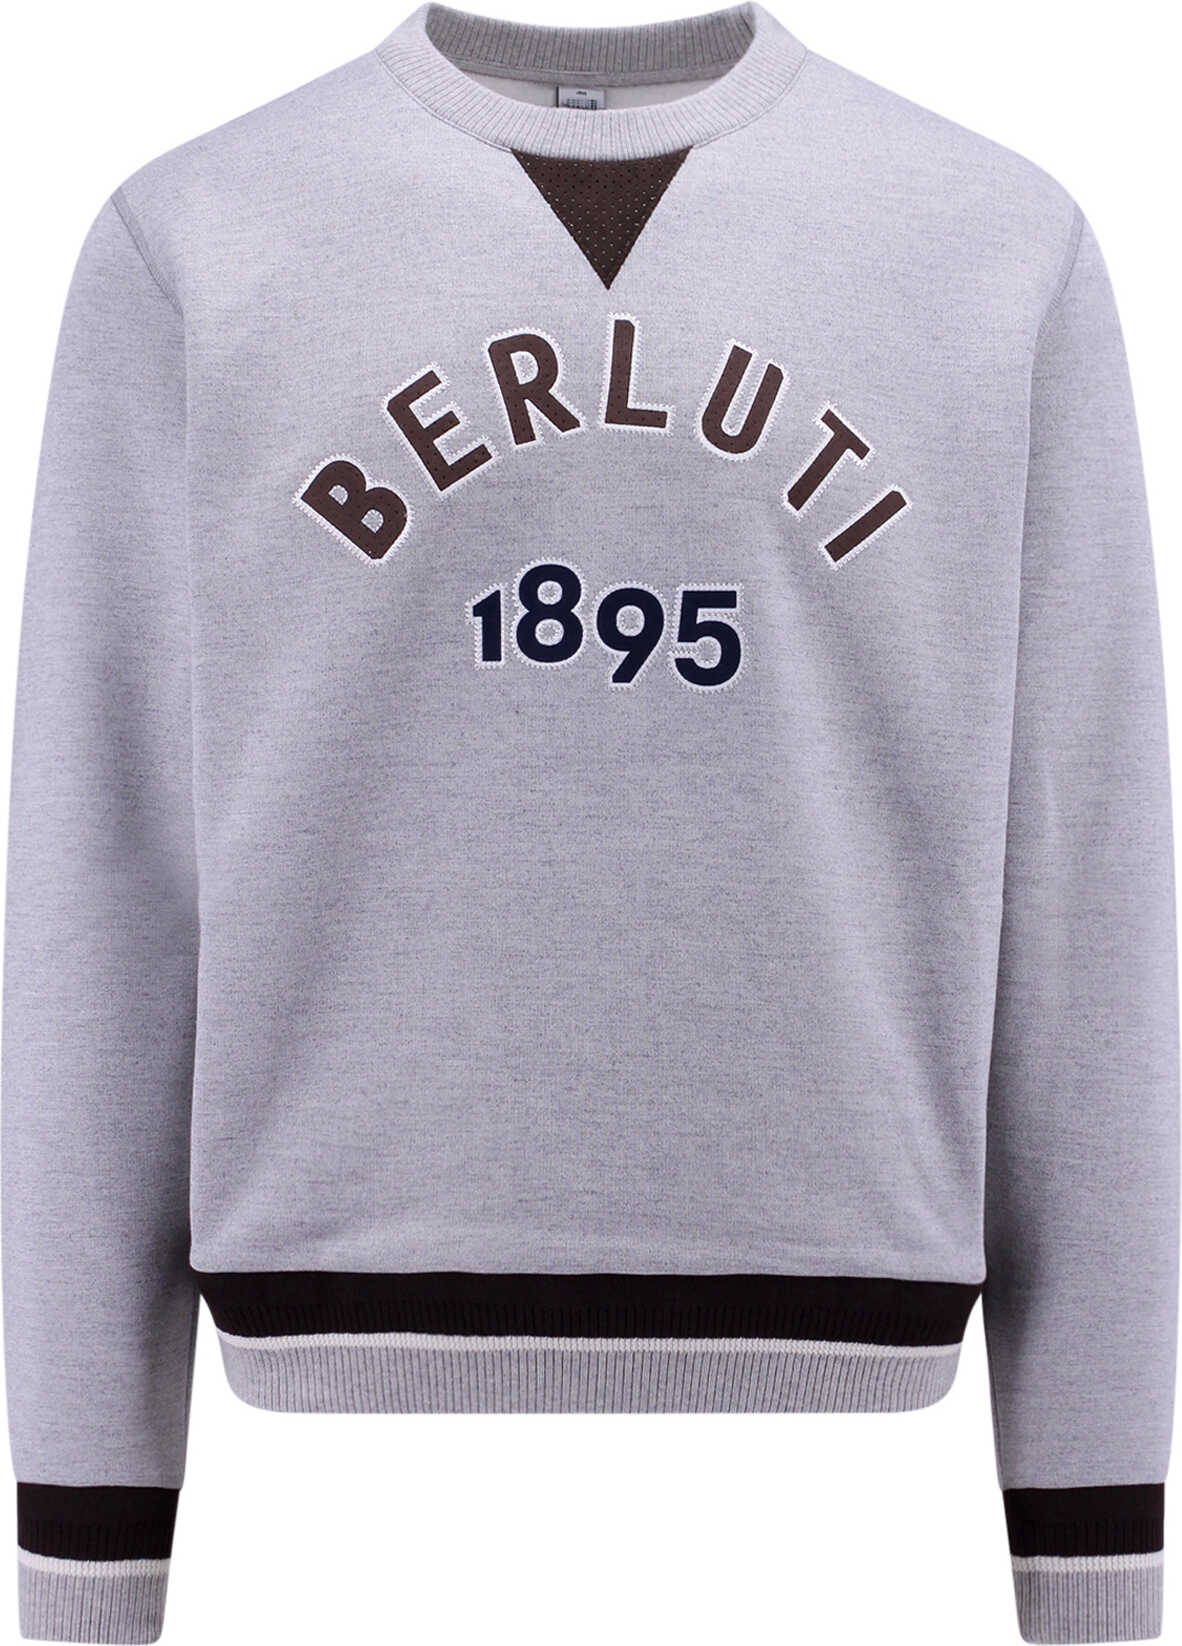 BERLUTI Sweatshirt Grey